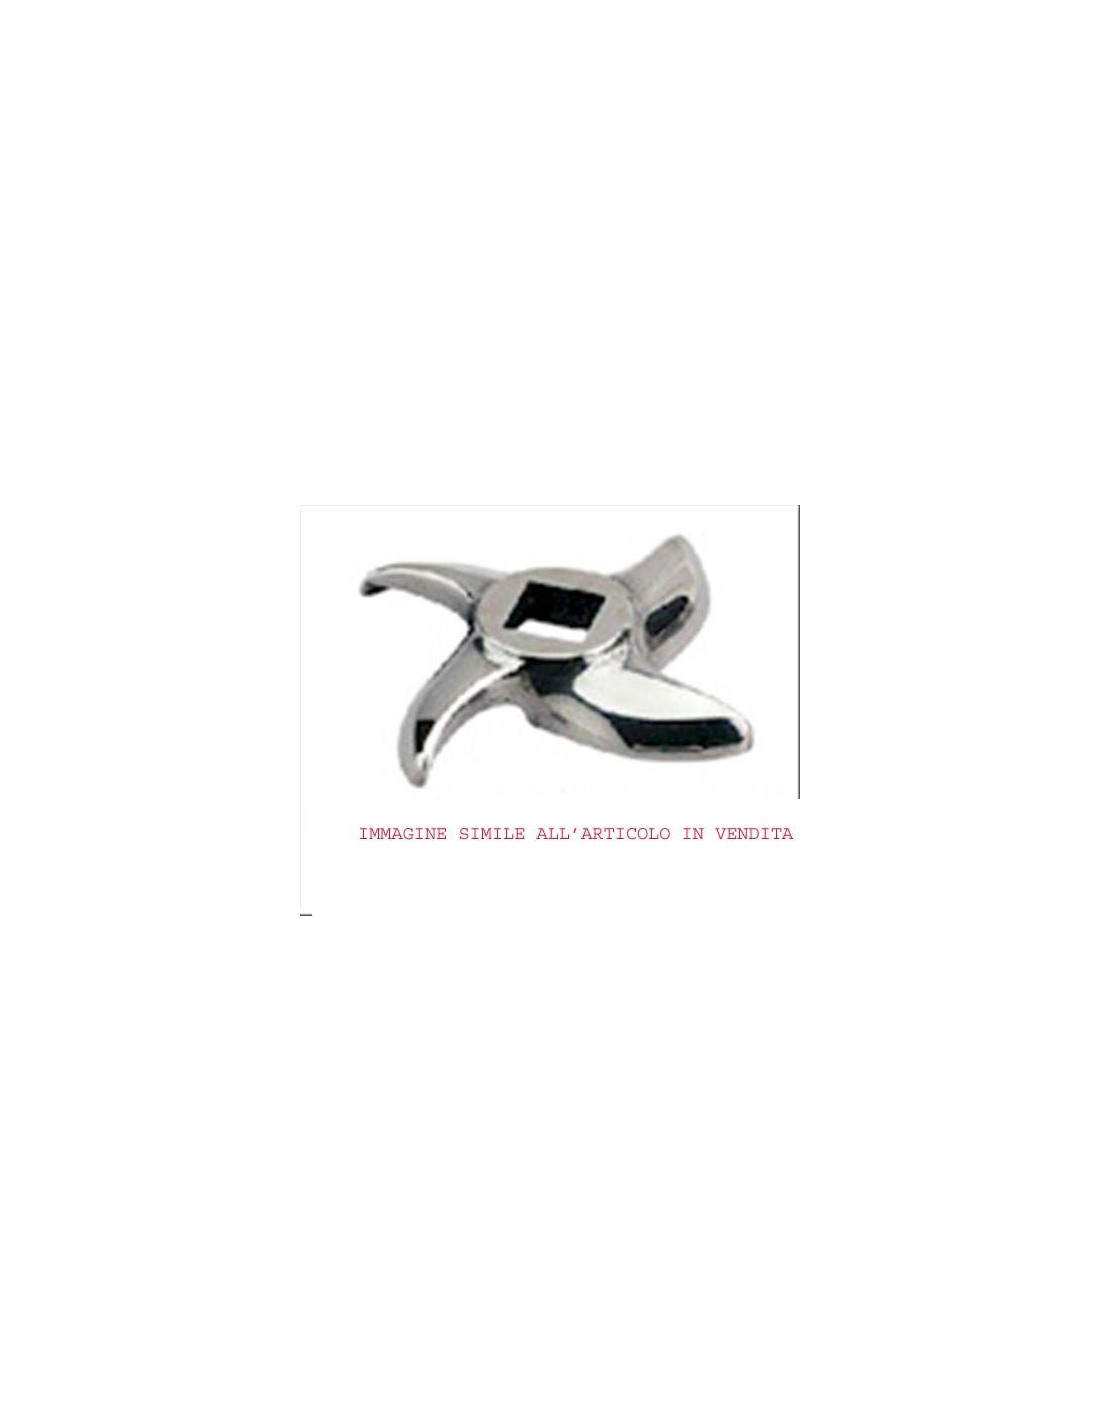 Cuchillas de acero inoxidable autoafilables (empresa) para picadora mod. 12